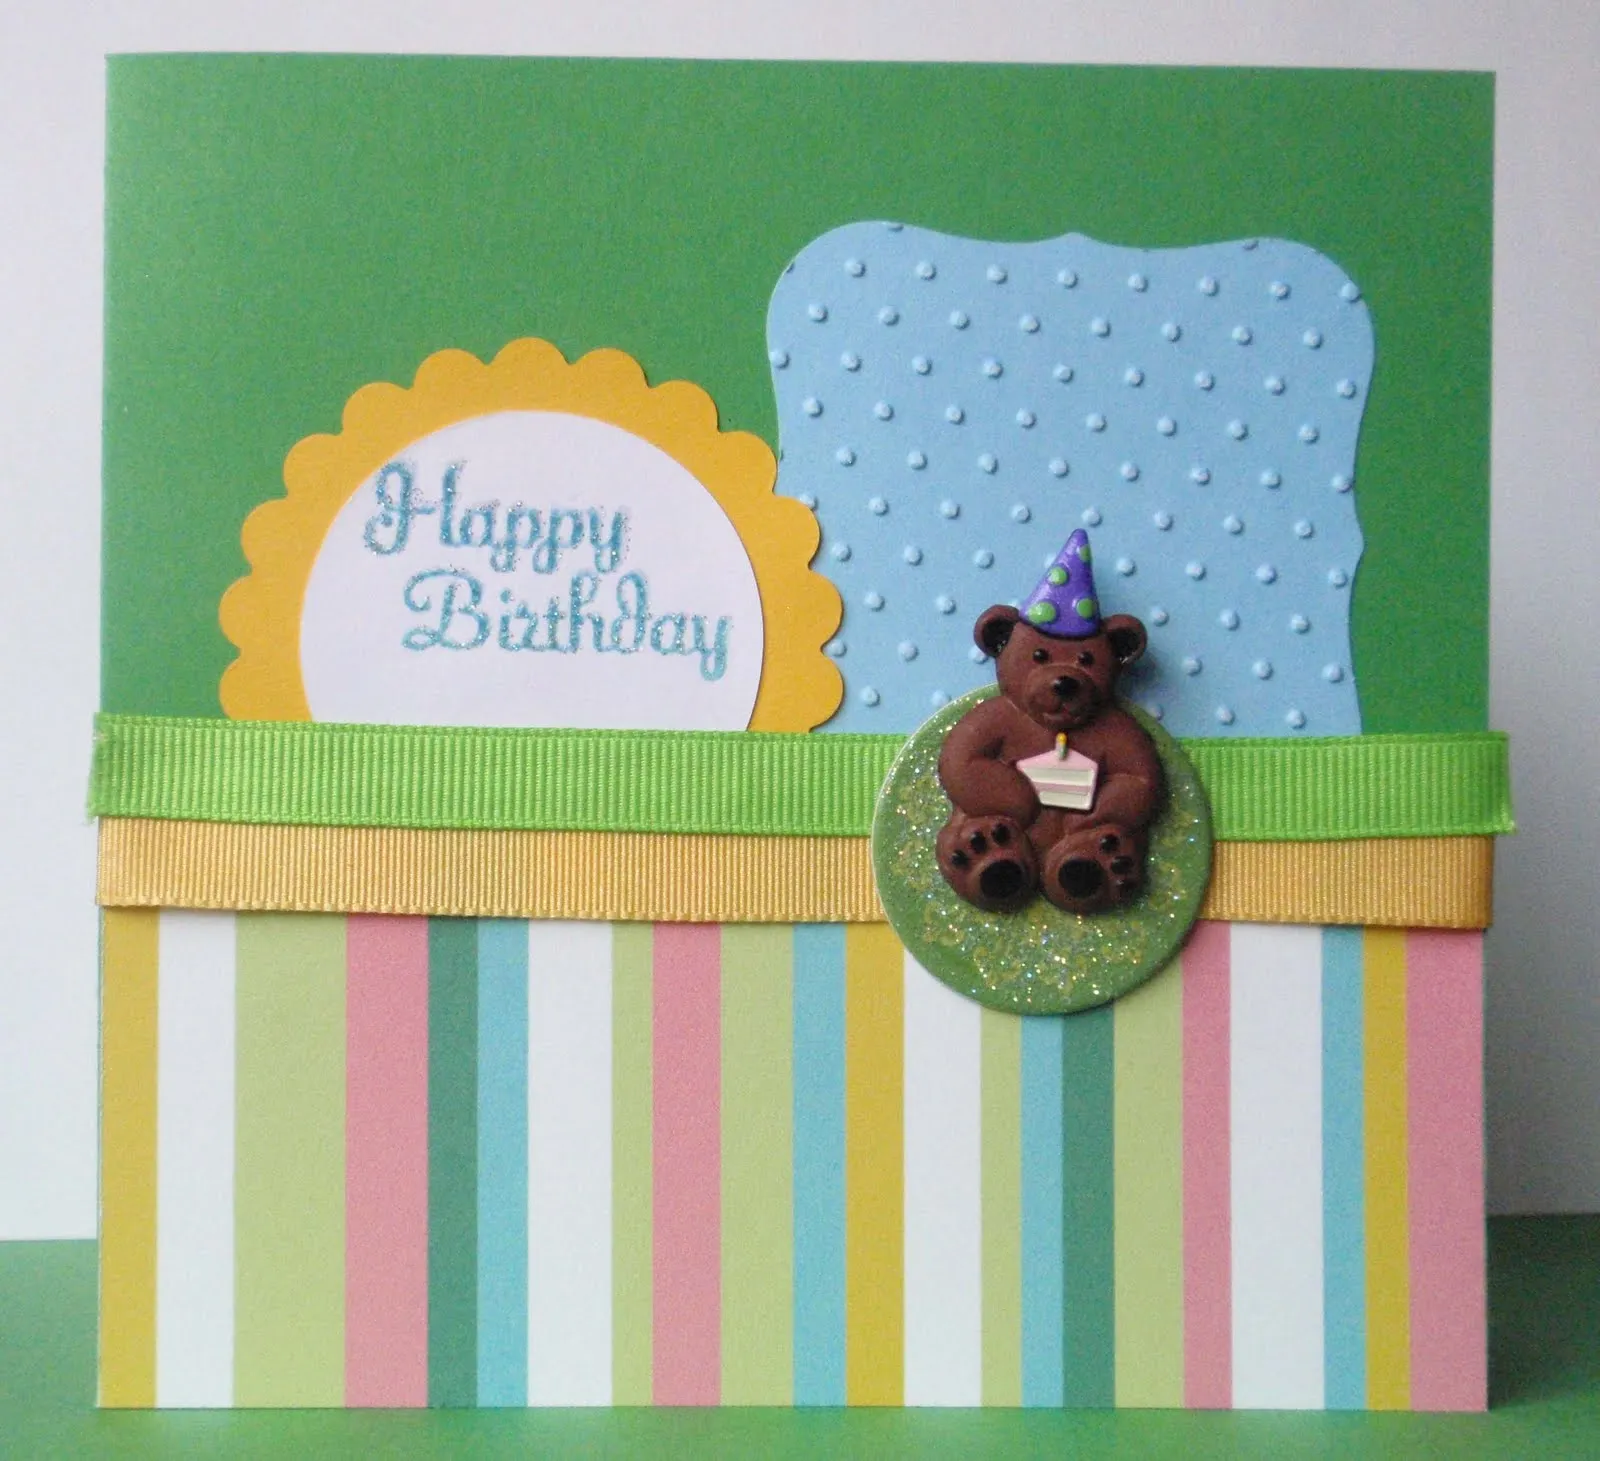 Tarjeta de cumpleaños / Happy birthday card | De Scrapbook & Animales ...